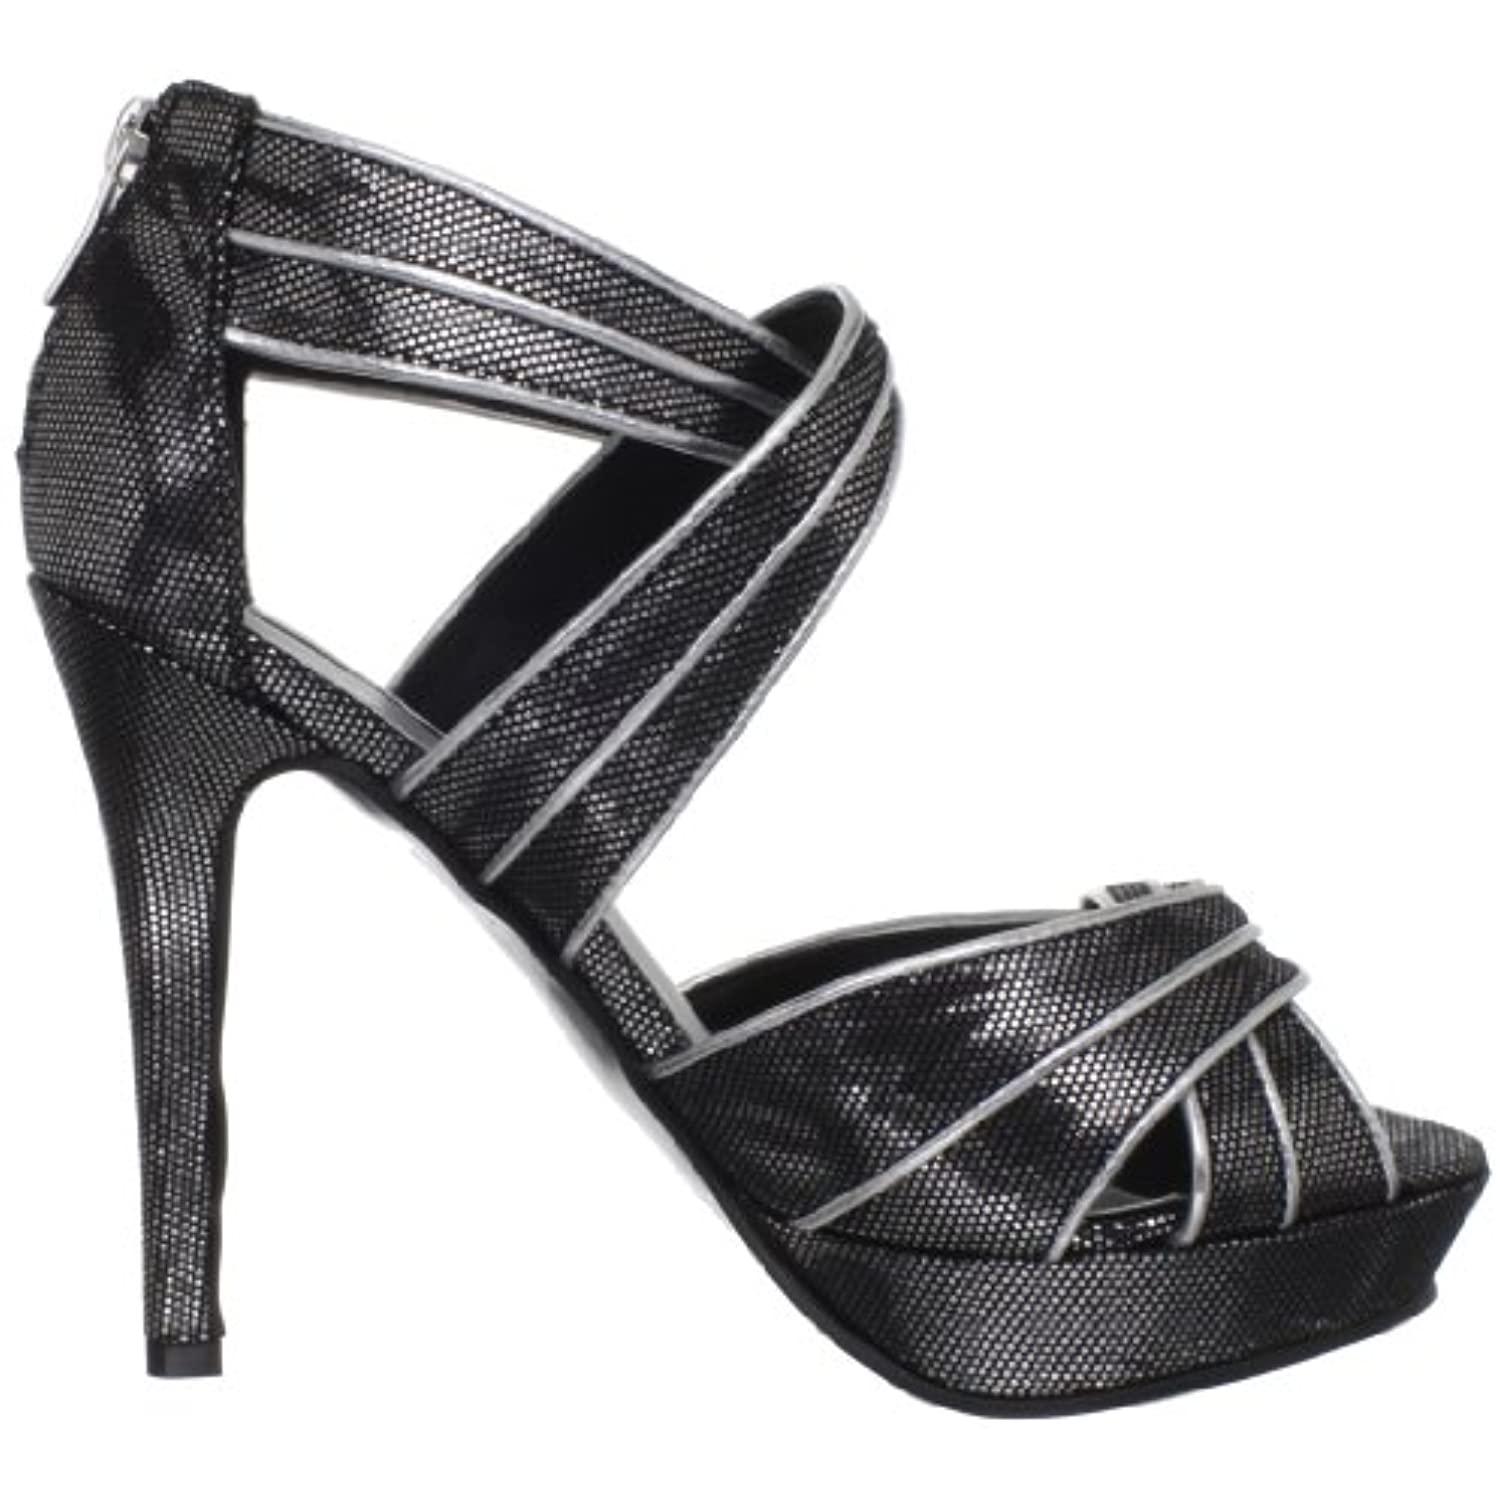 Touch Ups Women's Blair Synthetic Platform Sandal,Black,8.5 M US